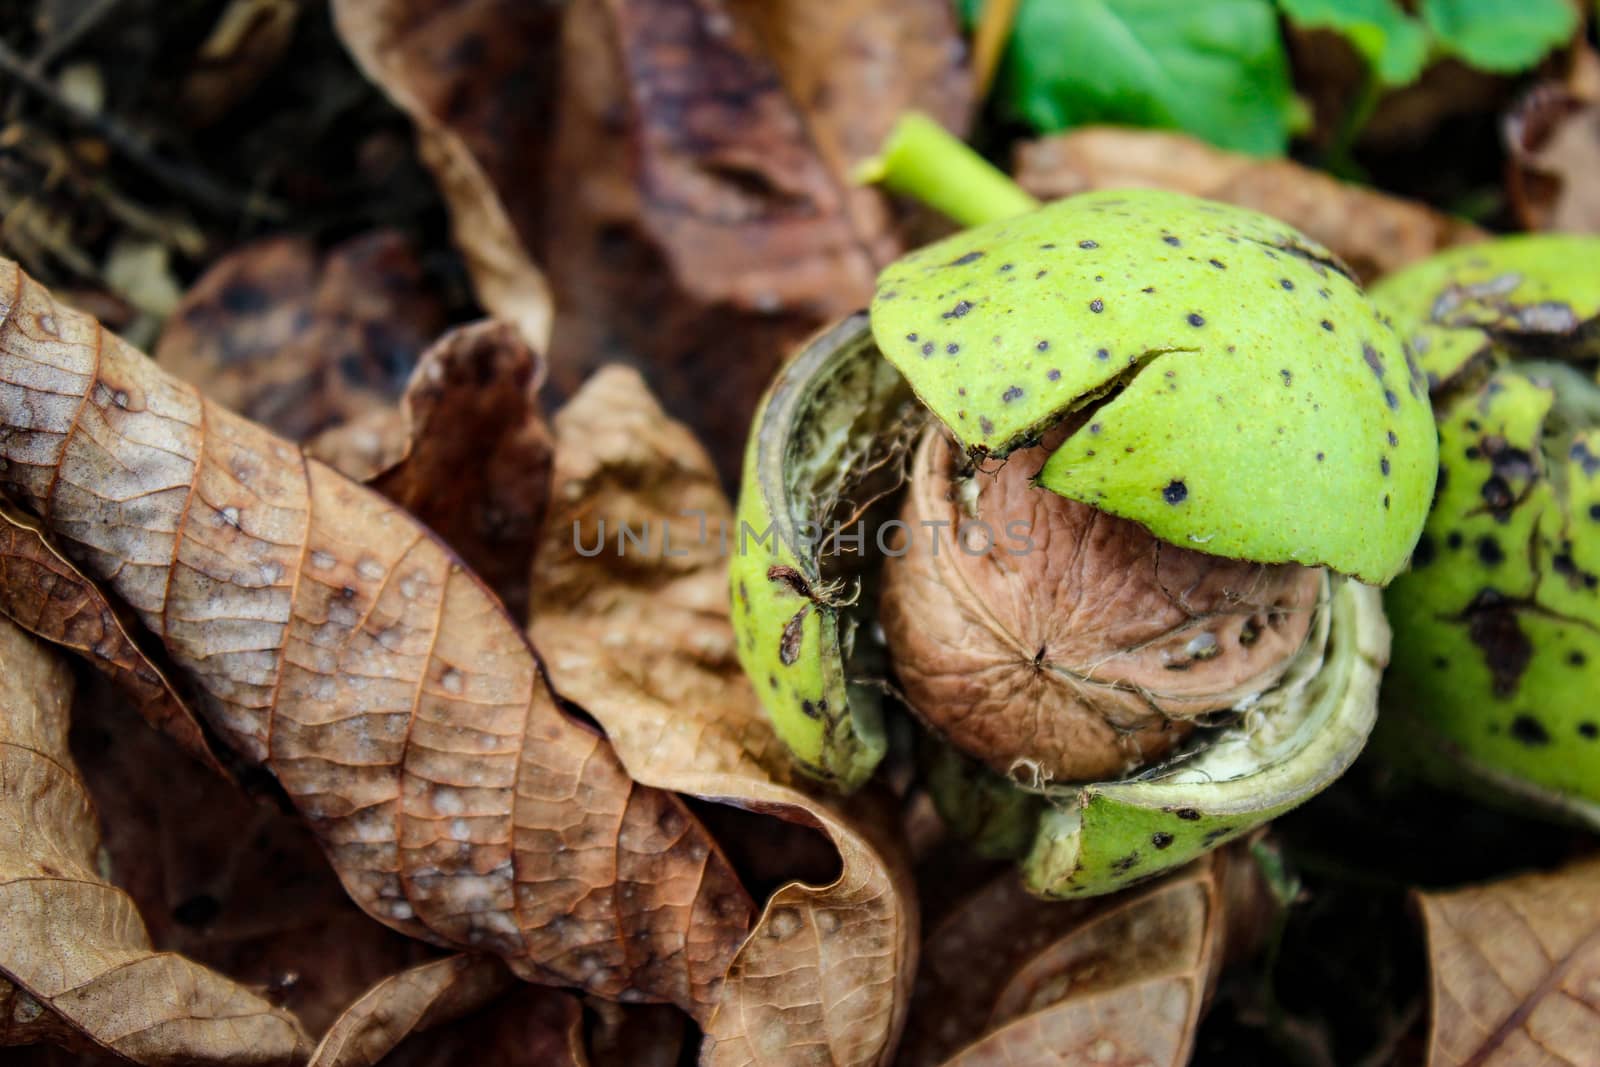 Walnut fruit on the ground on a dry leaf. The walnut fruit is seen inside the cracked green shell. Zavidovici, Bosnia and Herzegovina.